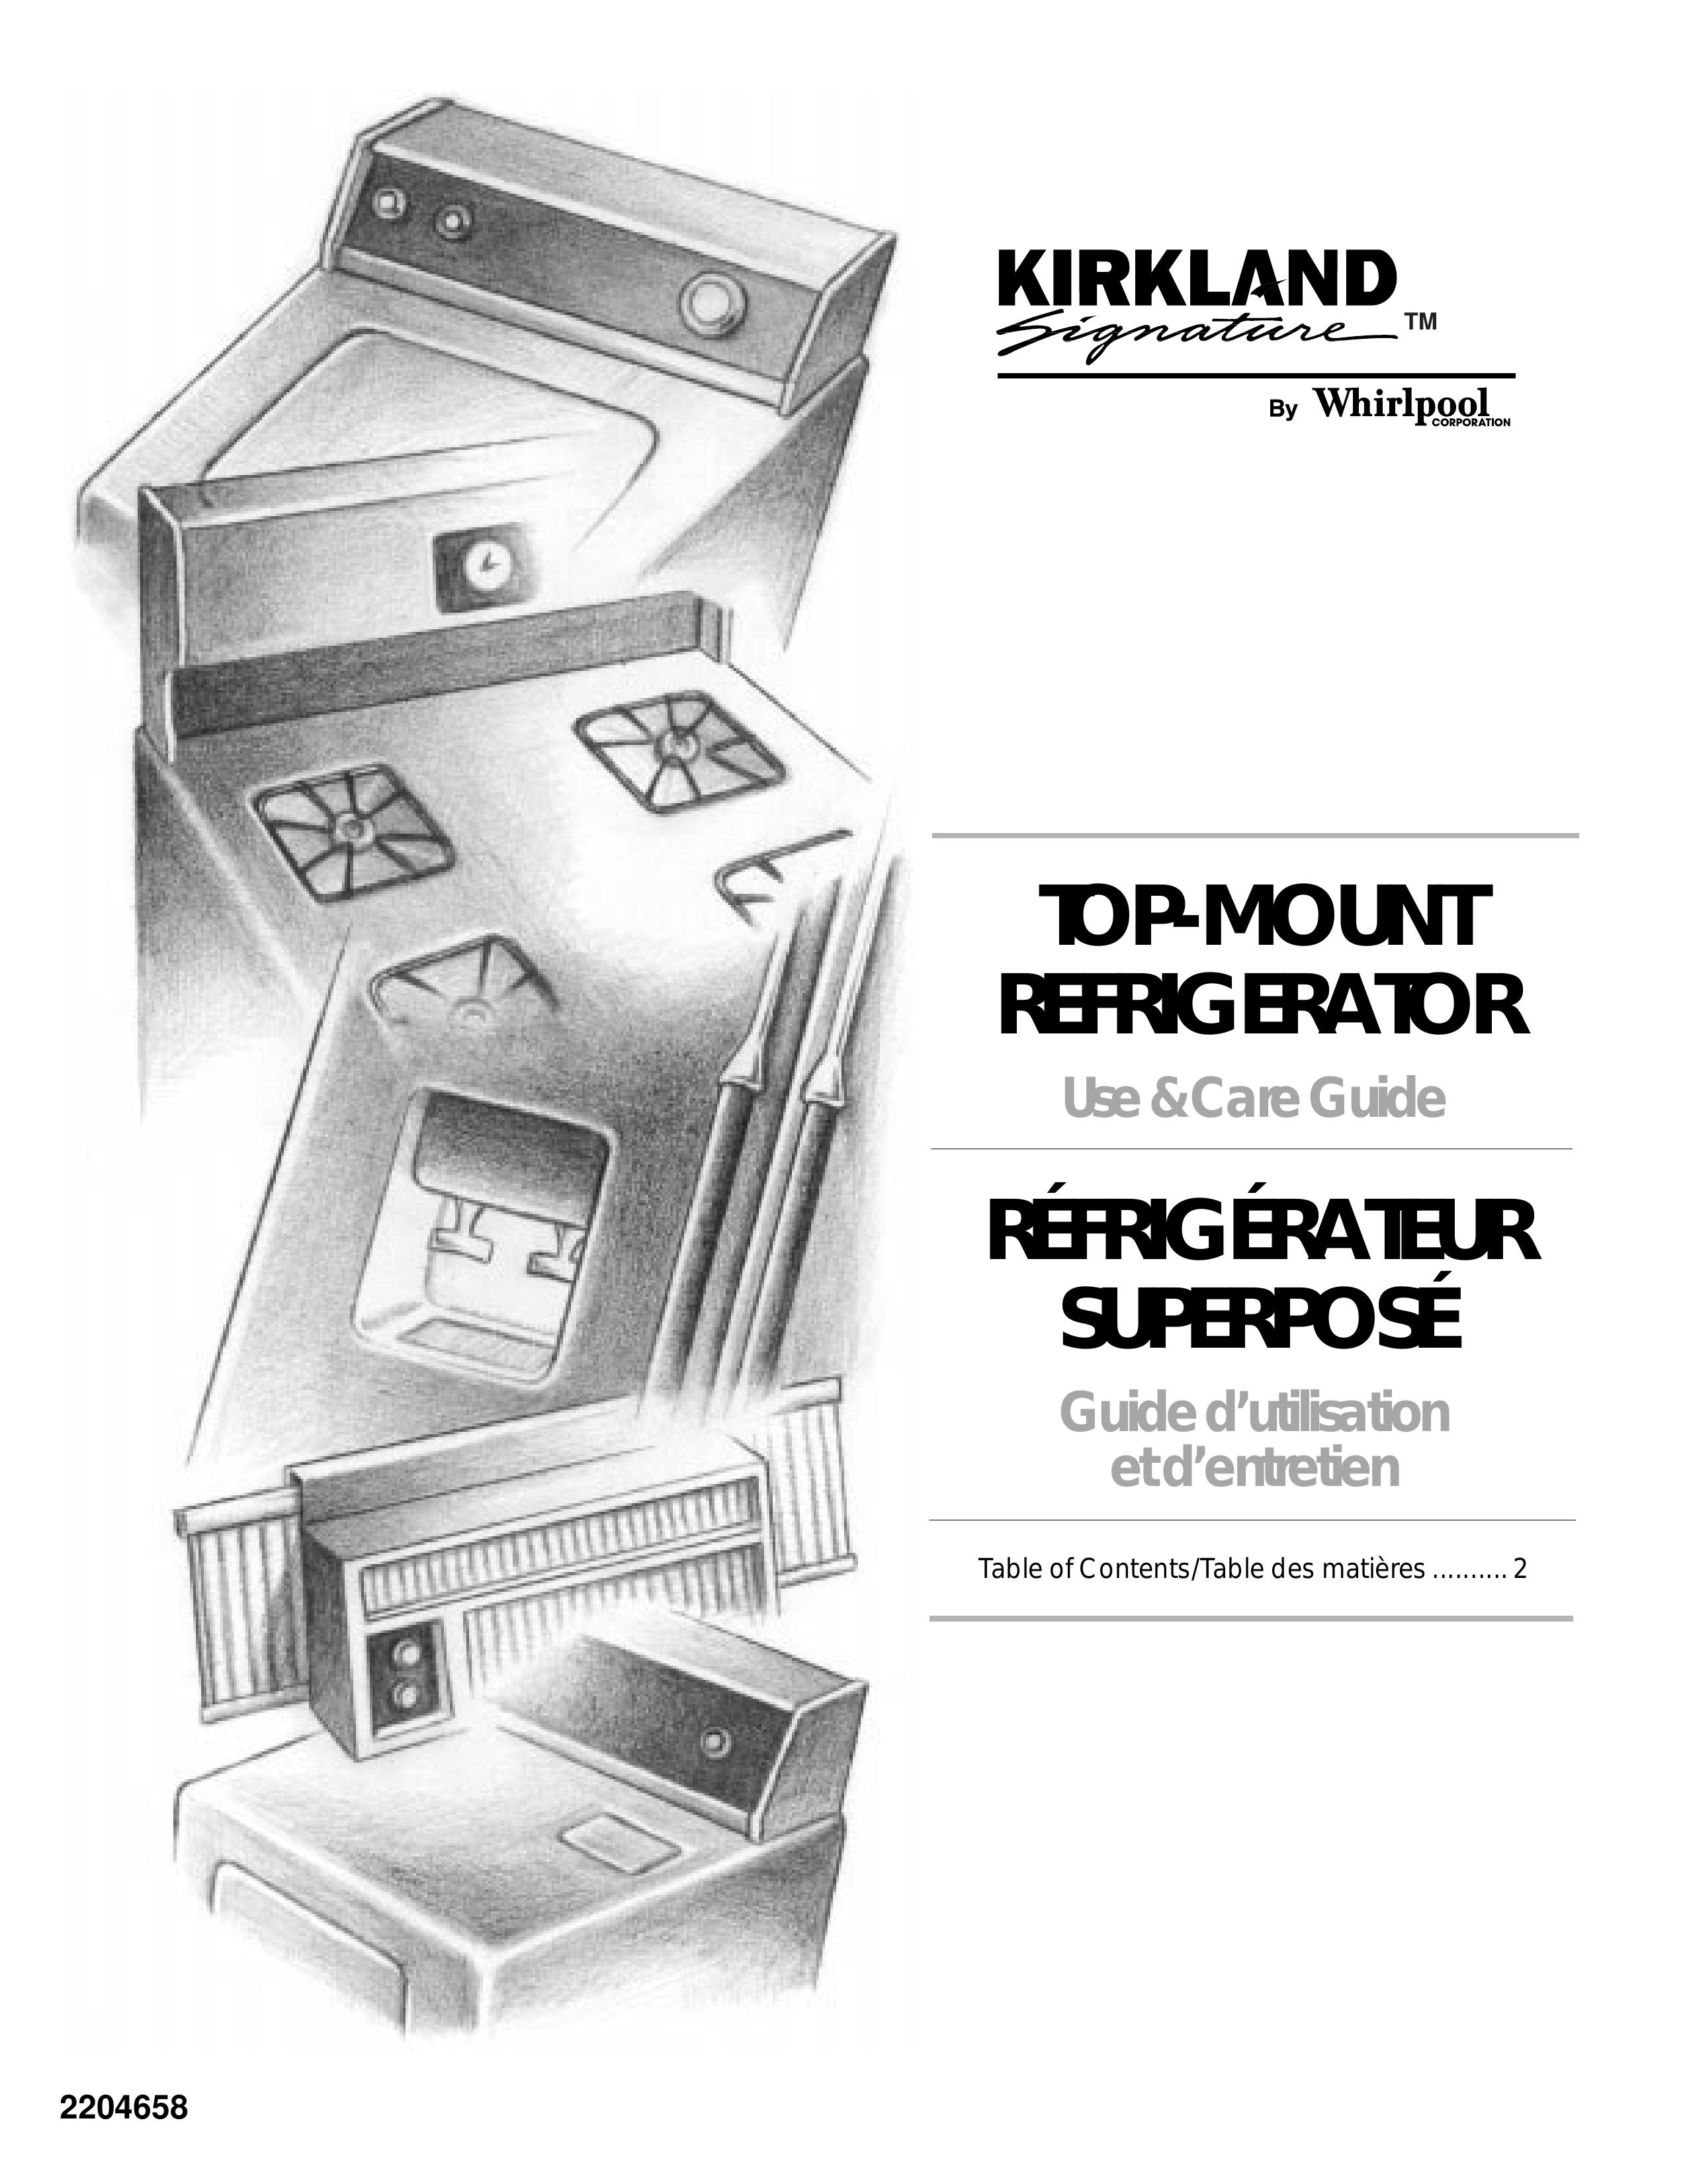 Whirlpool 2204658 Refrigerator User Manual